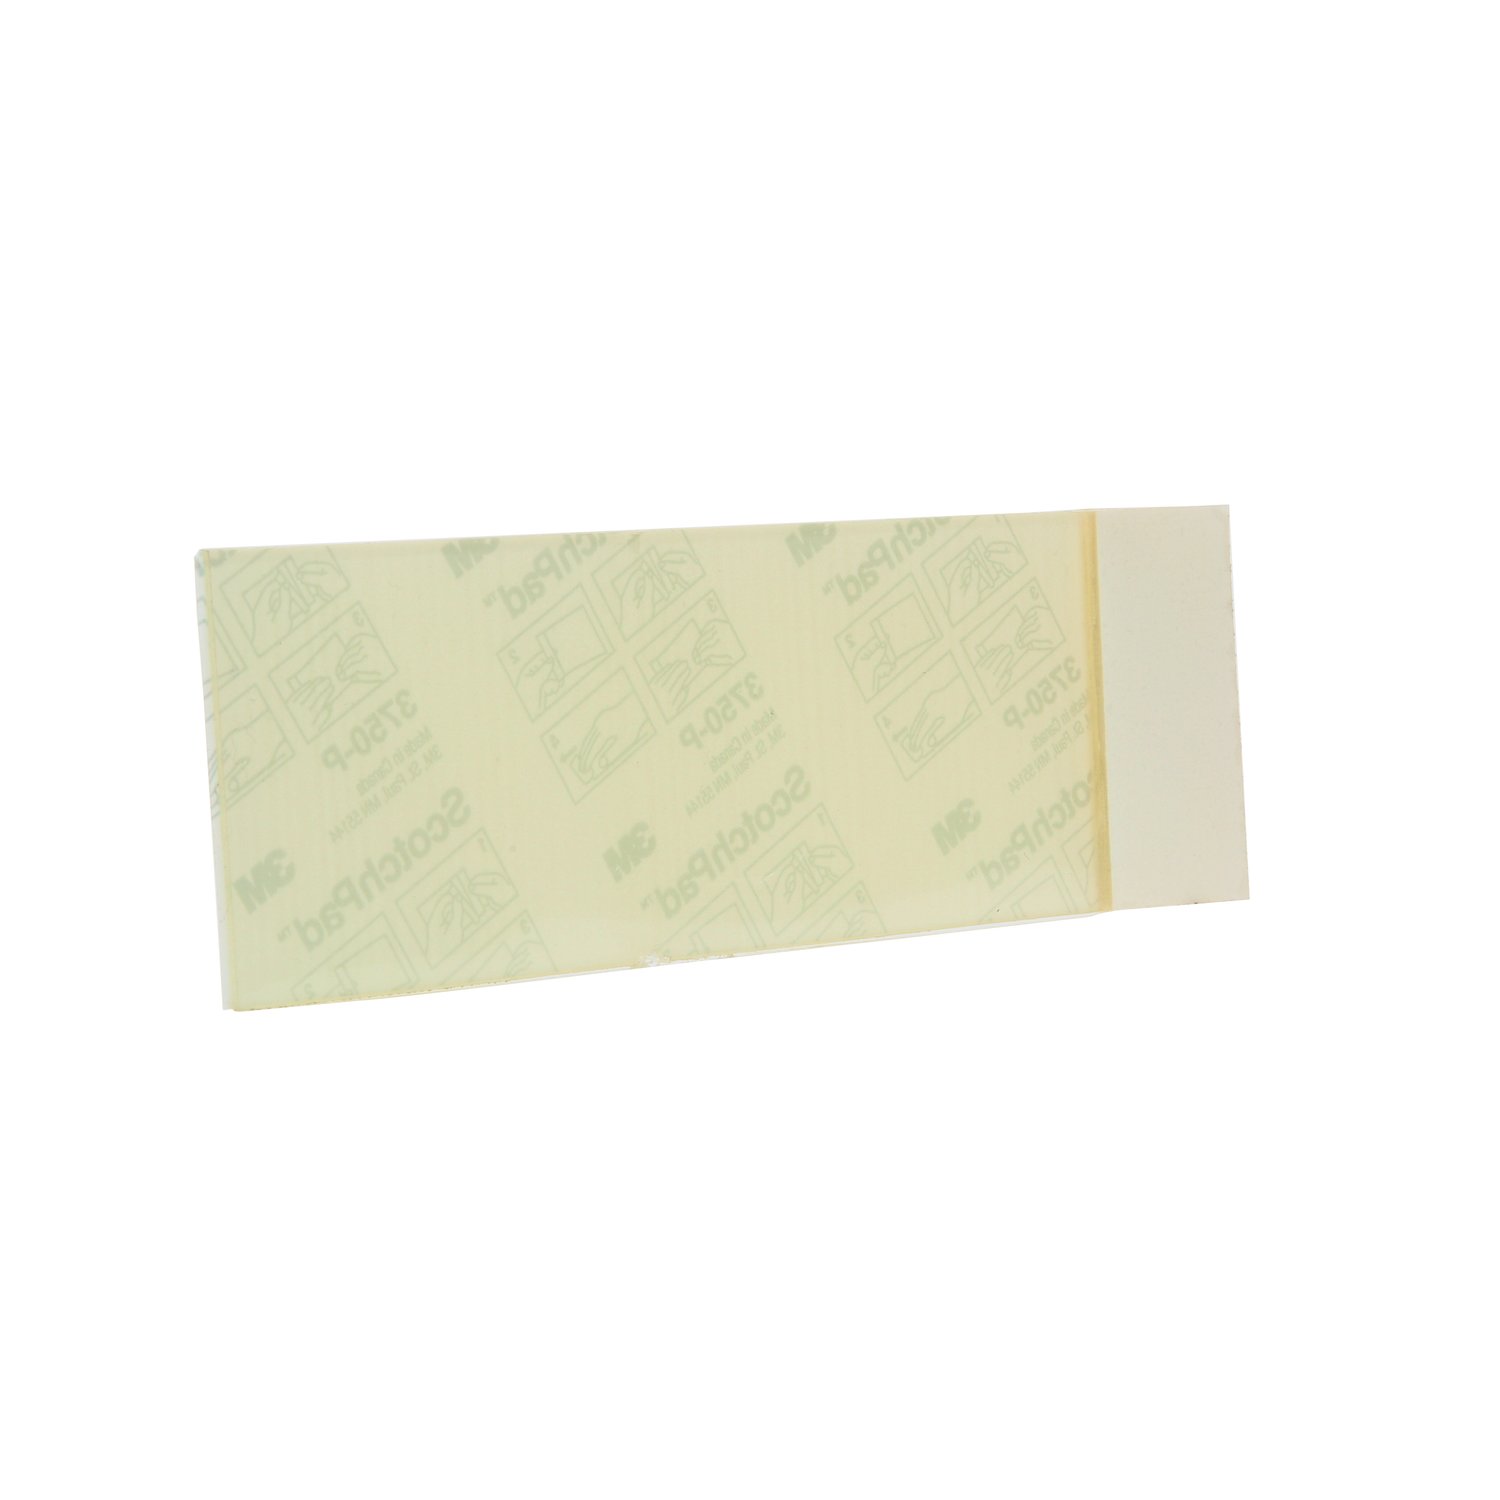  Nexcare Gentle Paper Tape Dispenser 789, 3/4 in x 8 yd